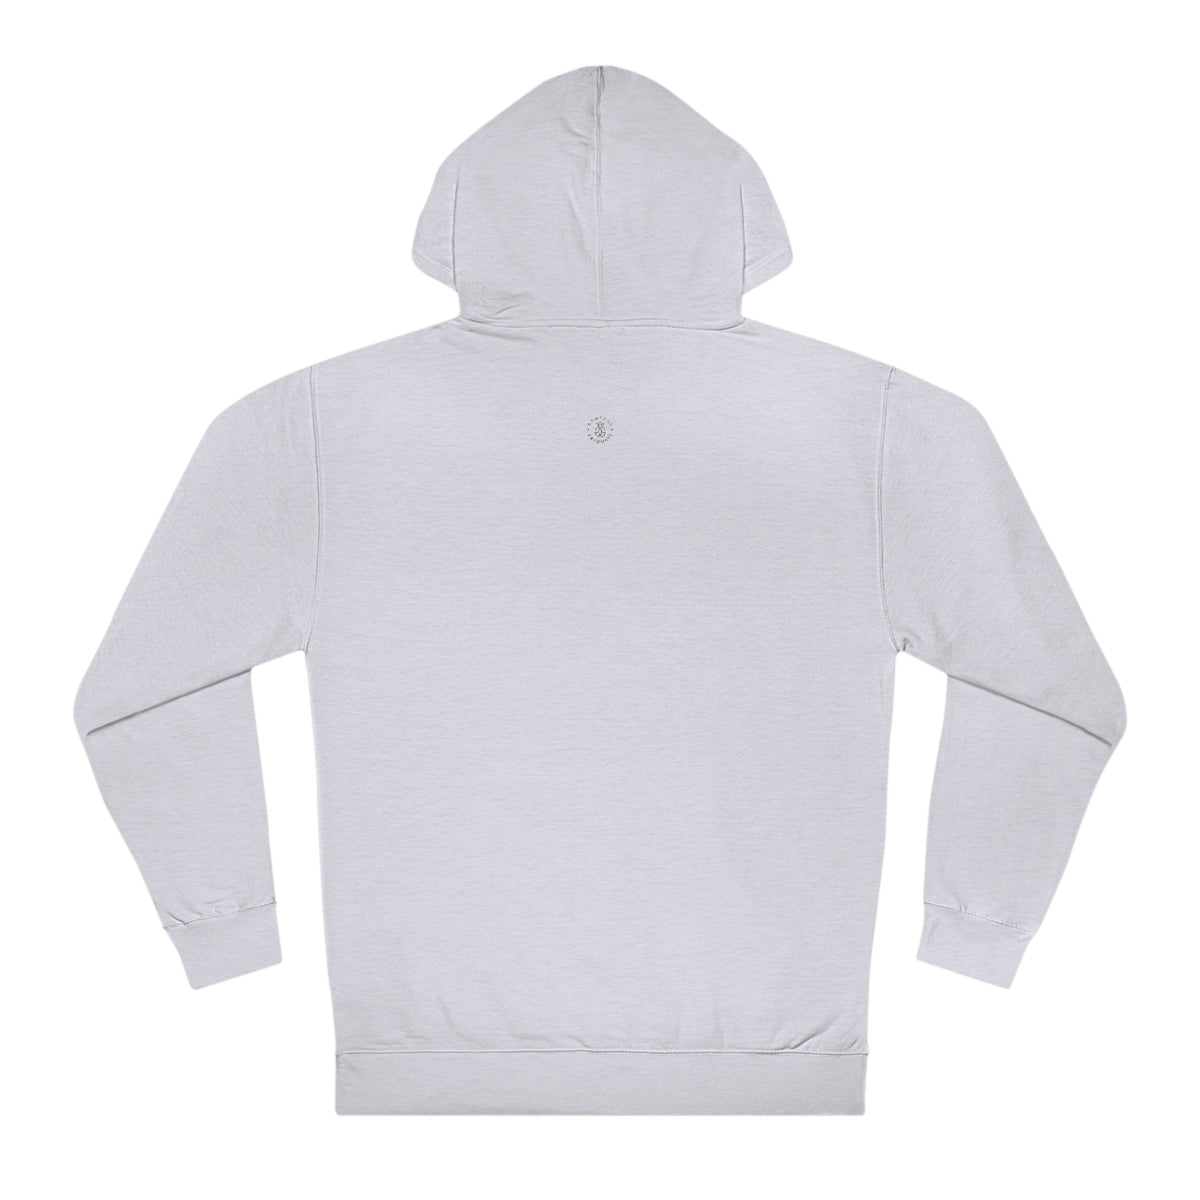 Wake Forest Hooded Sweatshirt - GG - ITC